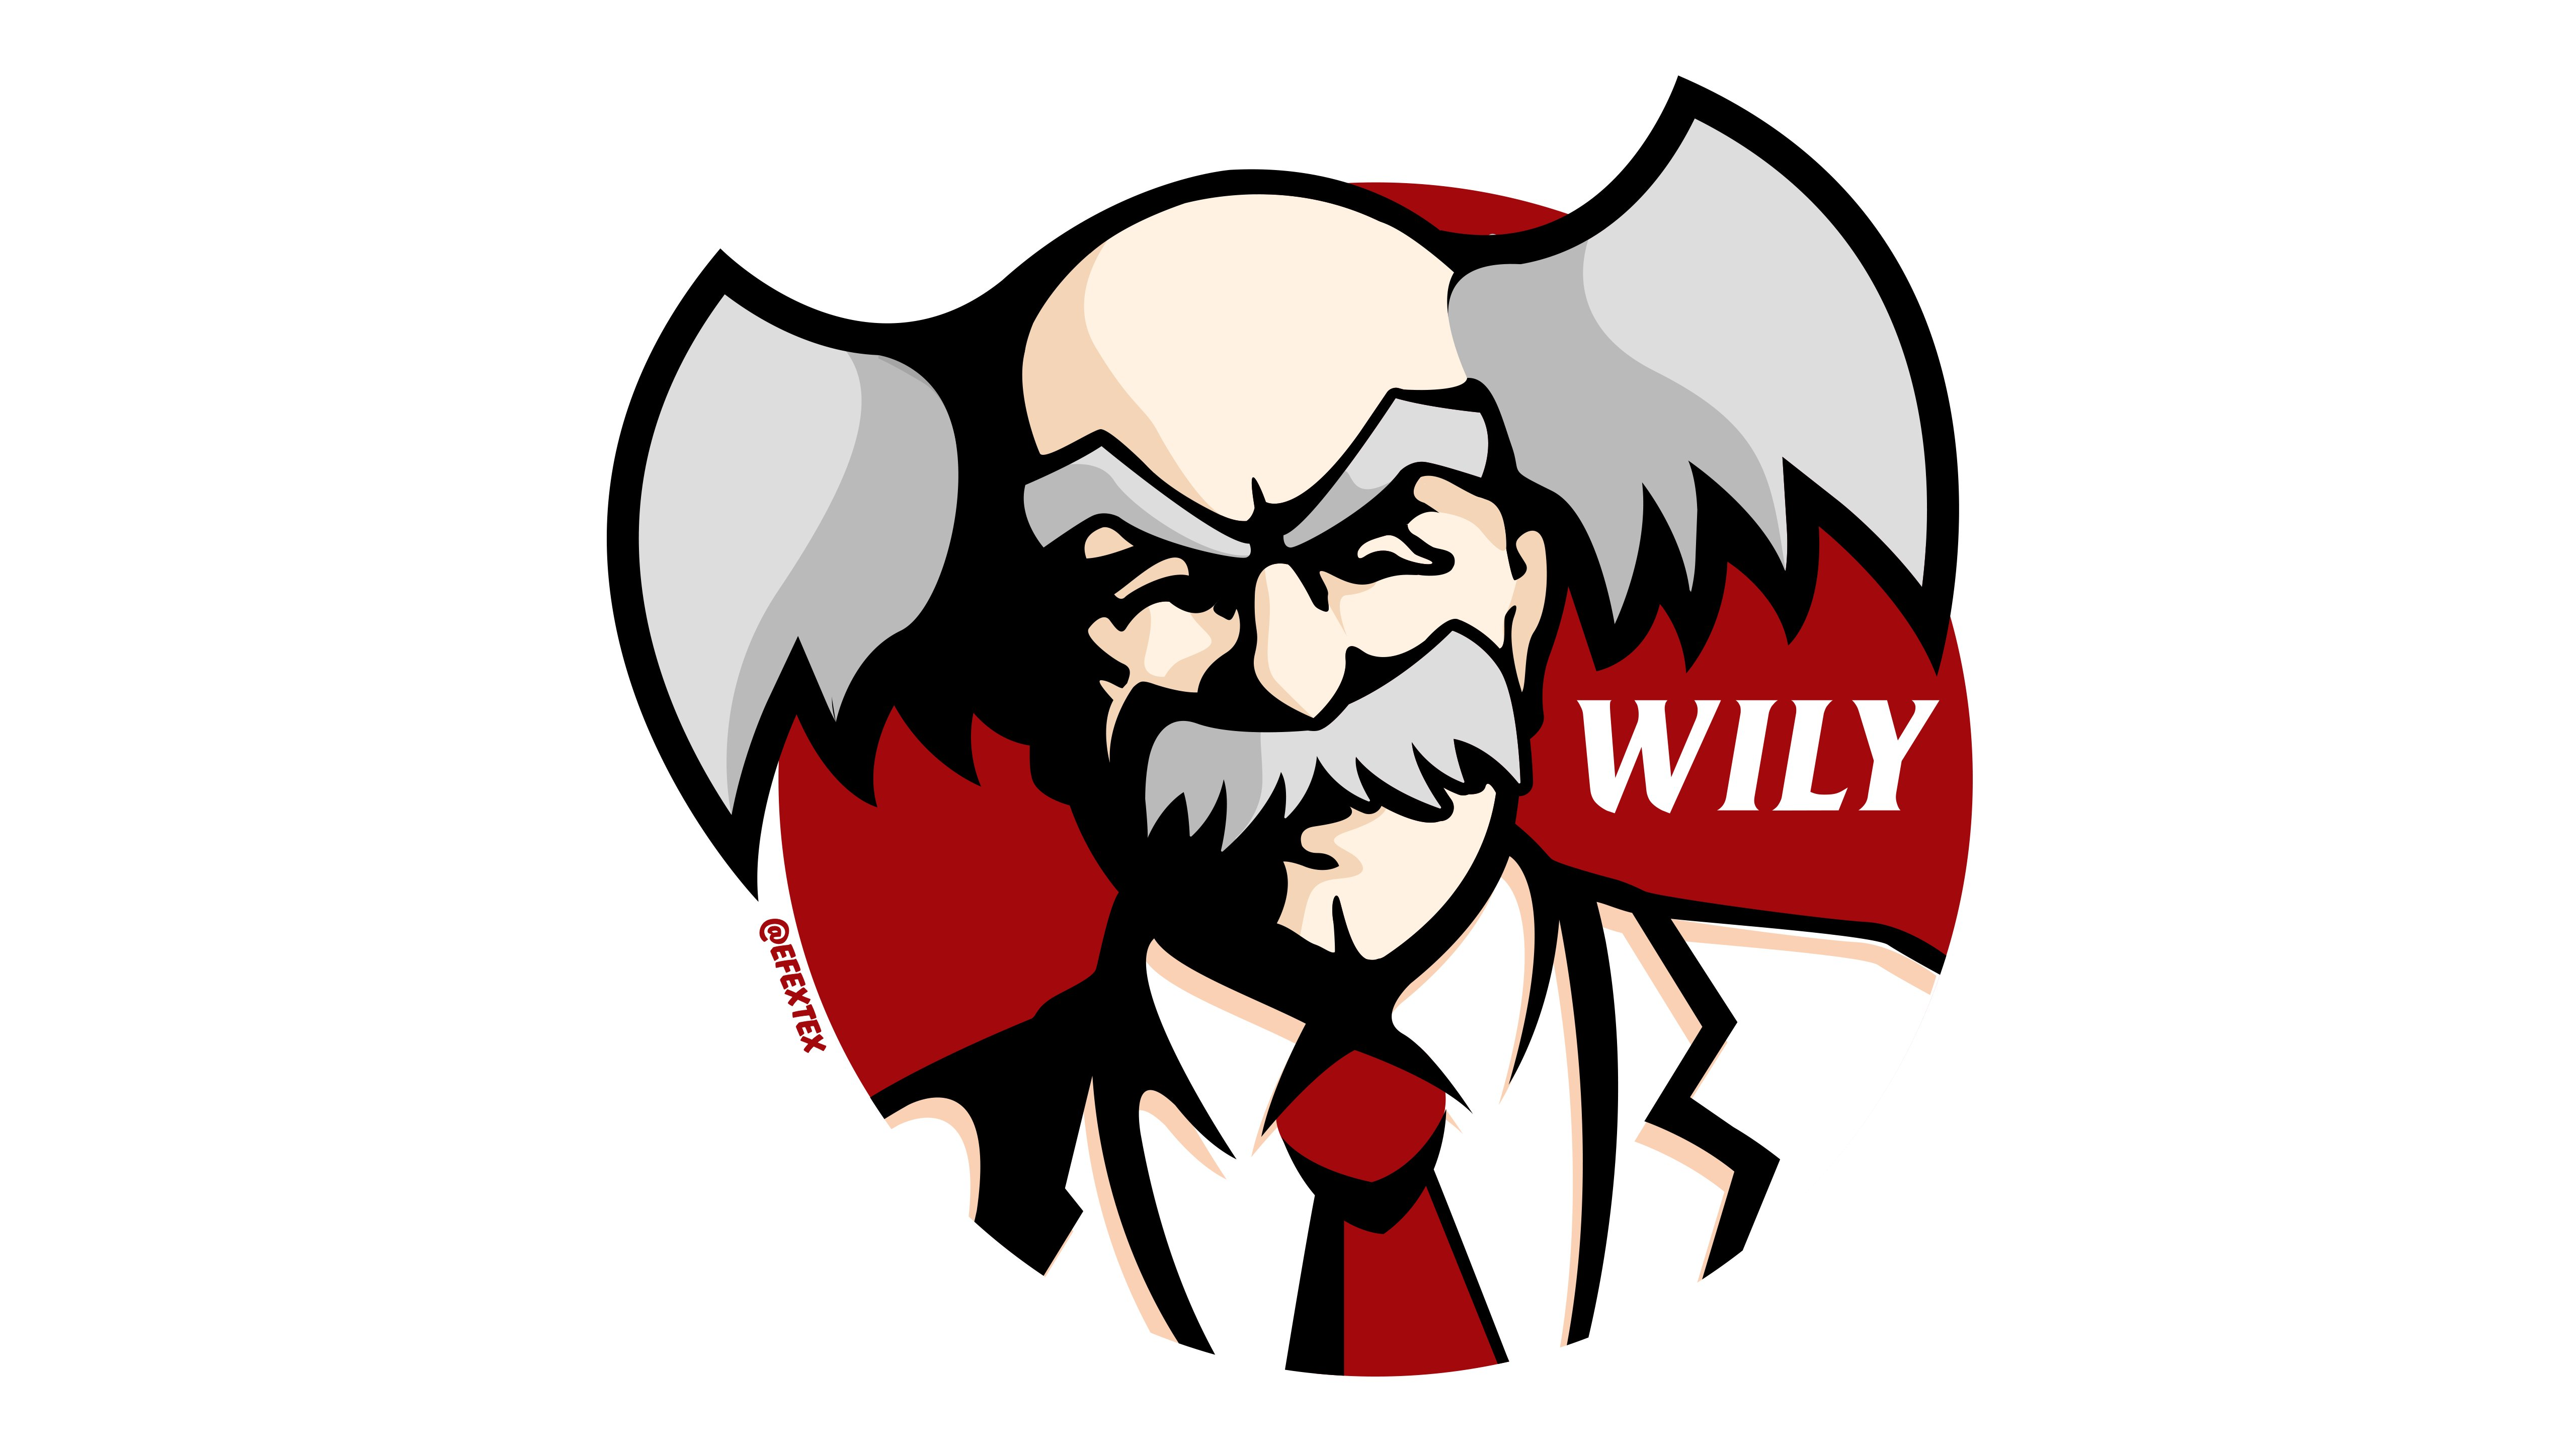 Dr Wily Mega Man Capcom Logo KFC Crossover Tie Red Tie Lab Coats Bald Gray Hair White Shirt Shirt Co 5120x2880